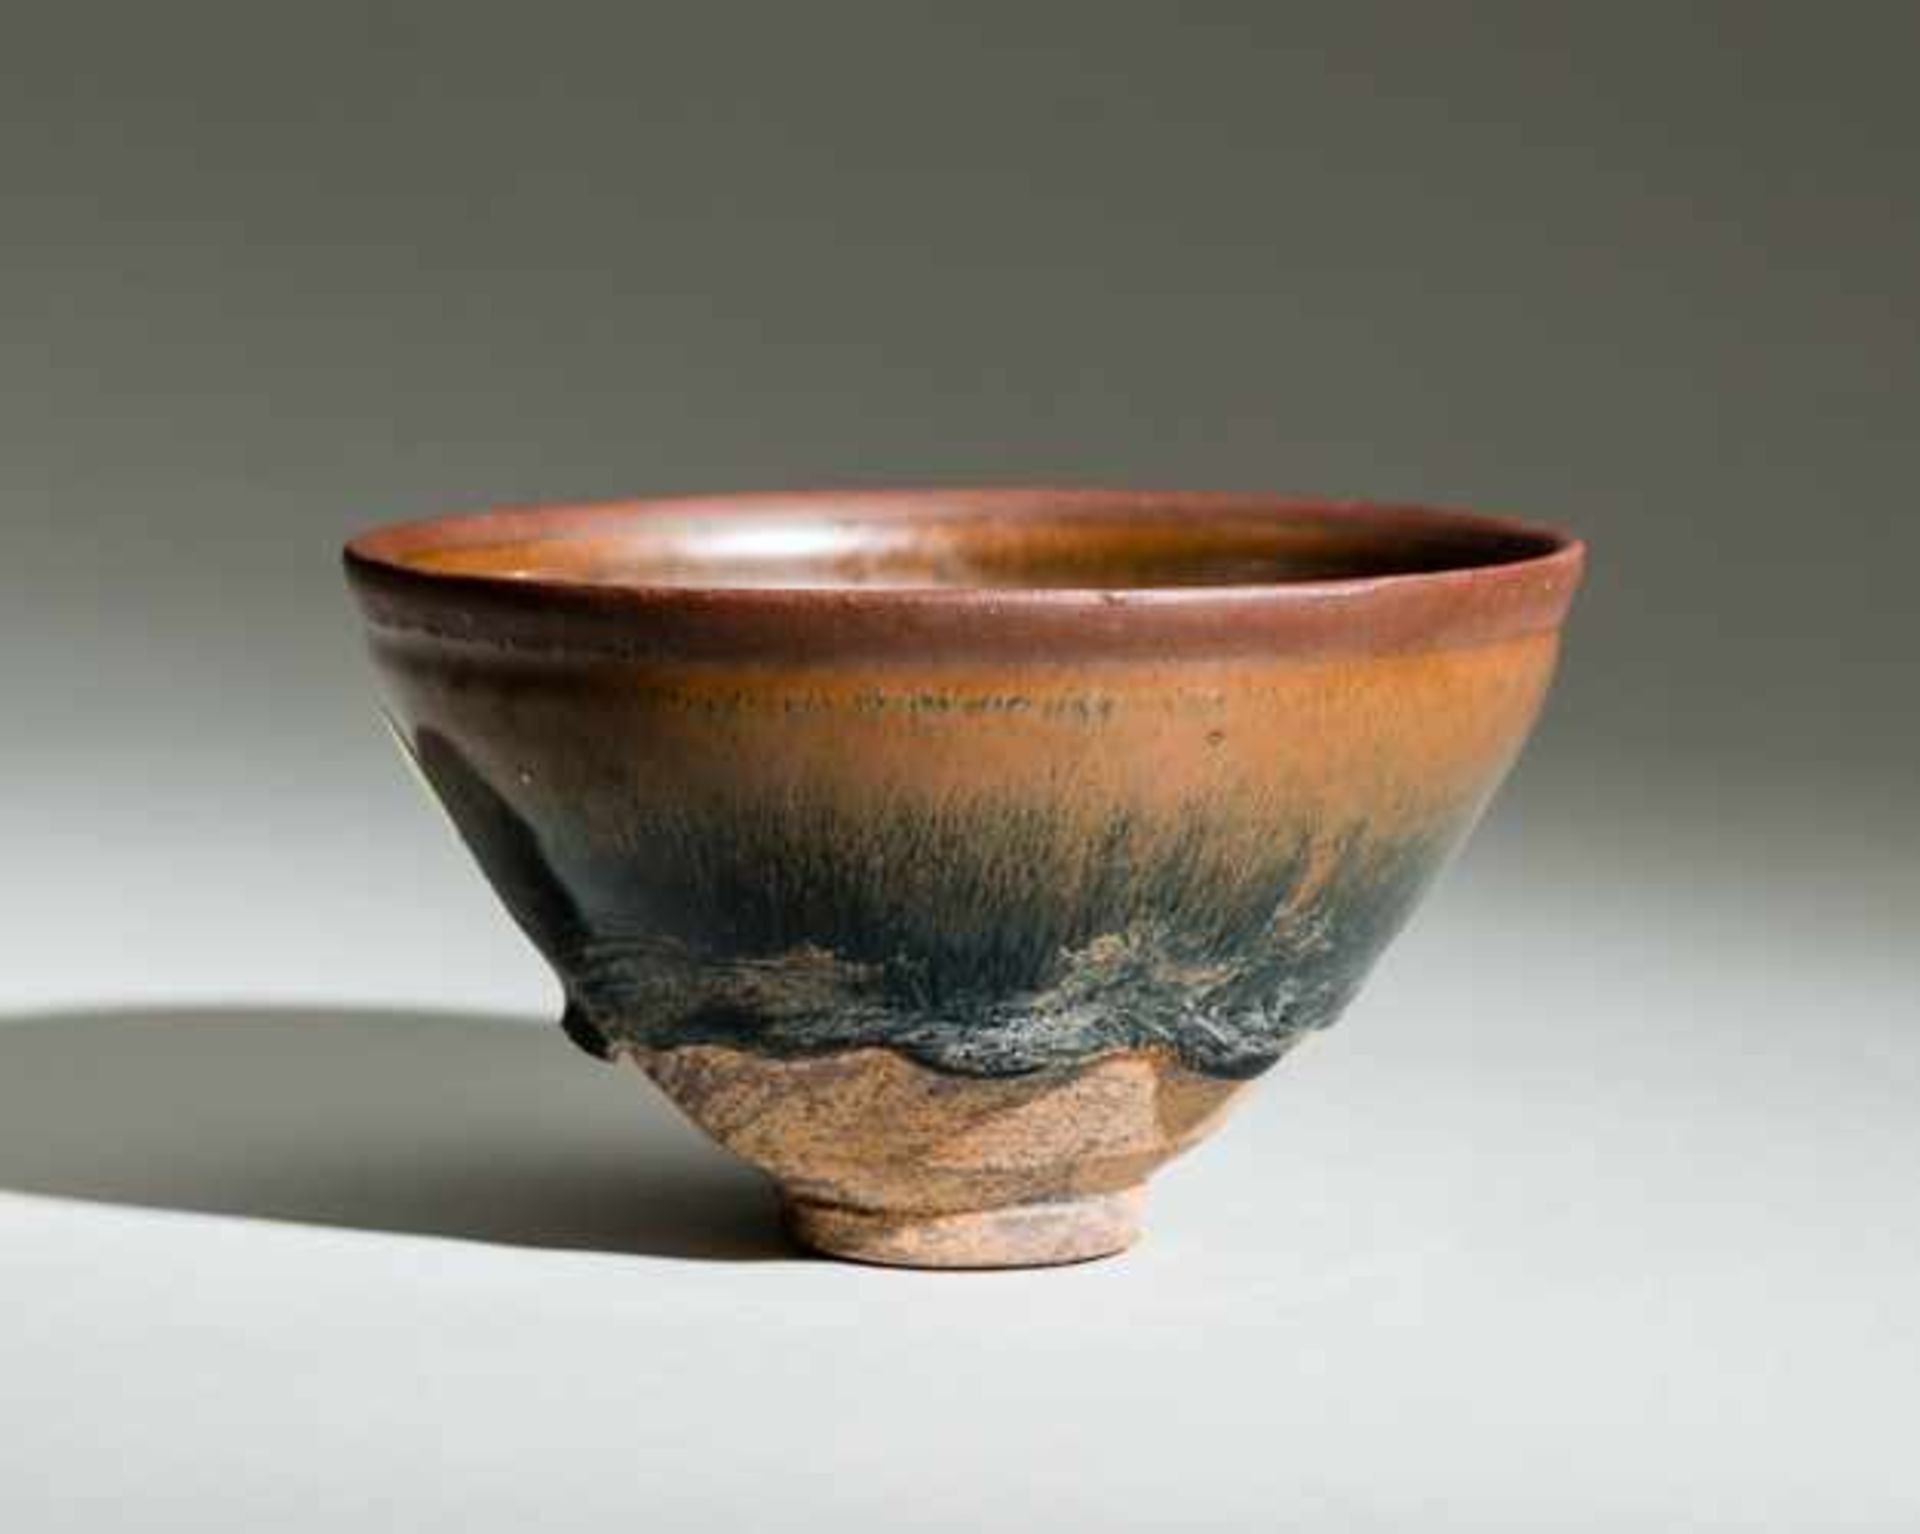 TIEFE TEMMOKU-SCHALEGlasierte Keramik. China, vermutlich Song bis Yuan, 12. bis 13. Jh.Tiefe